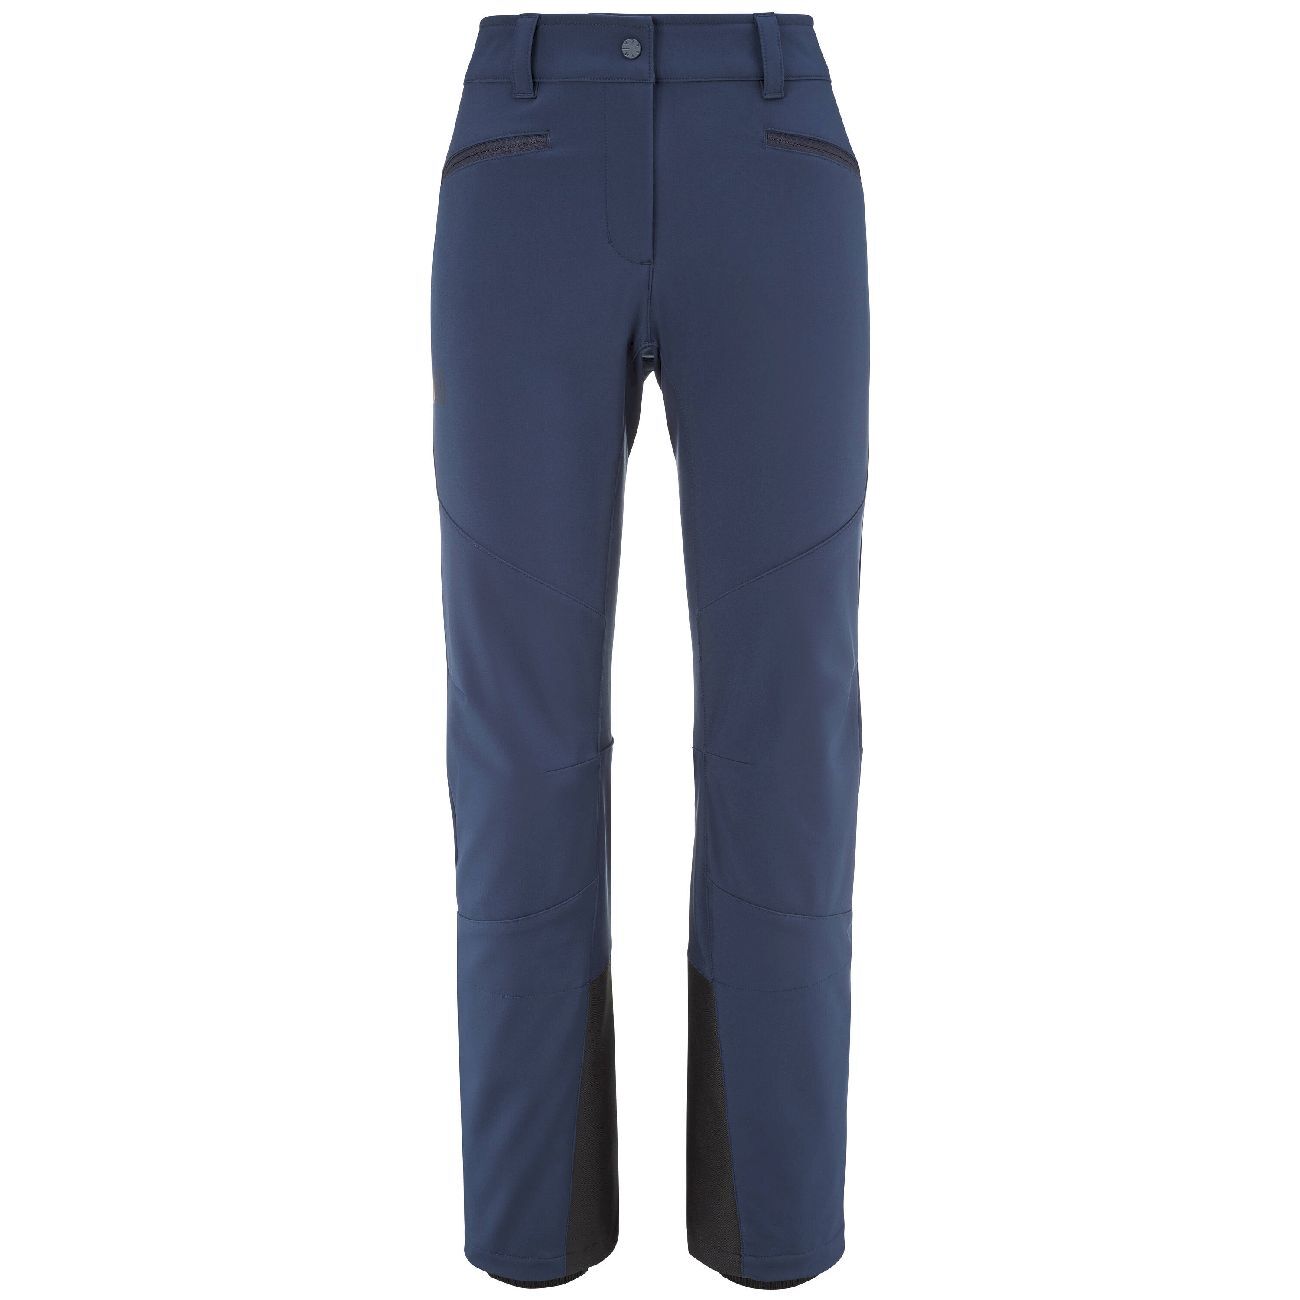 Millet Magma Pant - Walking trousers - Women's